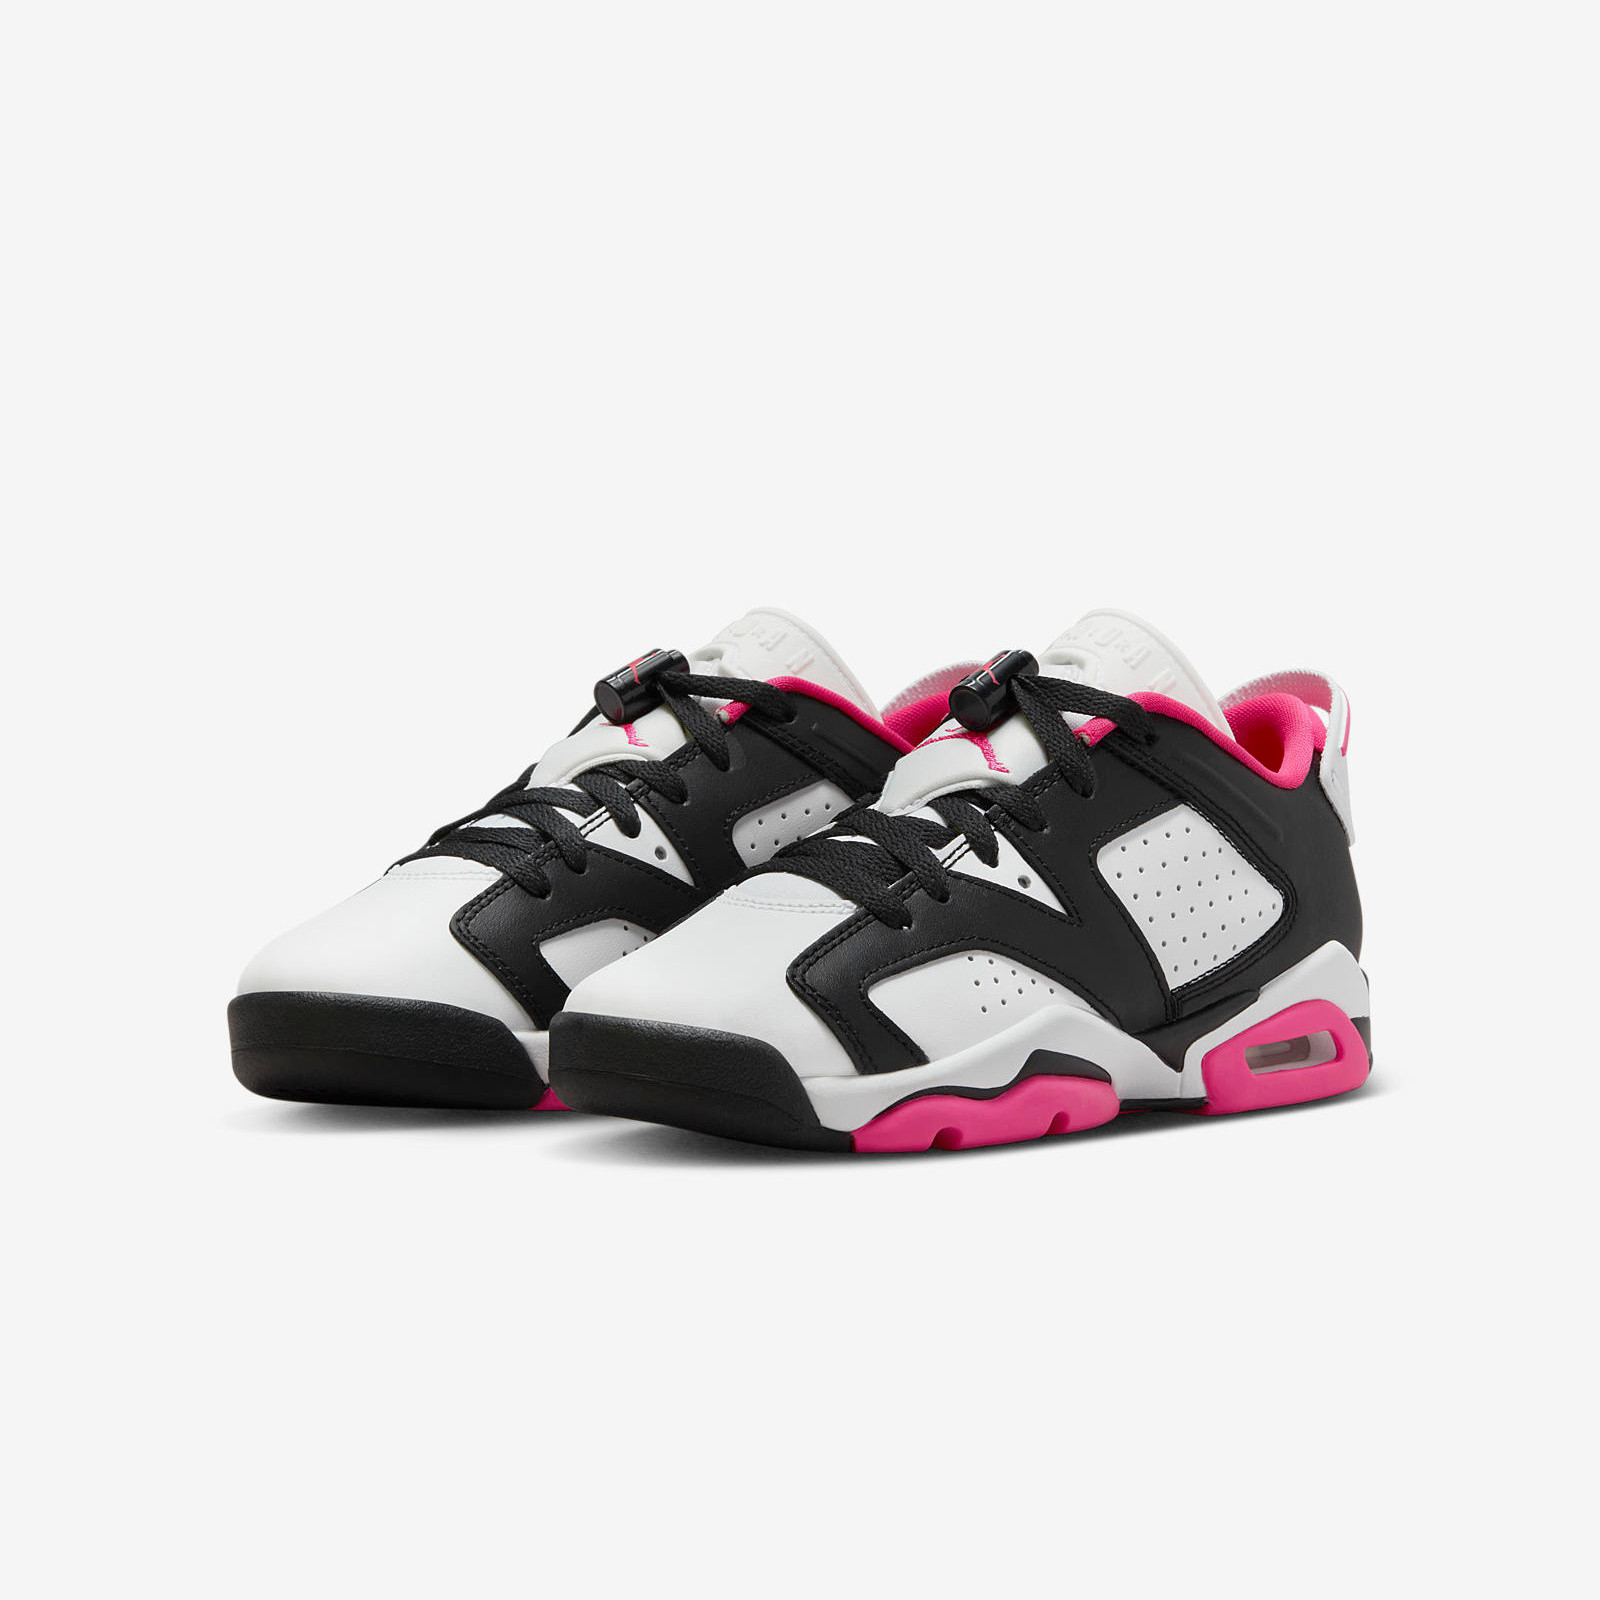 Air Jordan 6 Retro Low (GS)
« Fierce Pink »